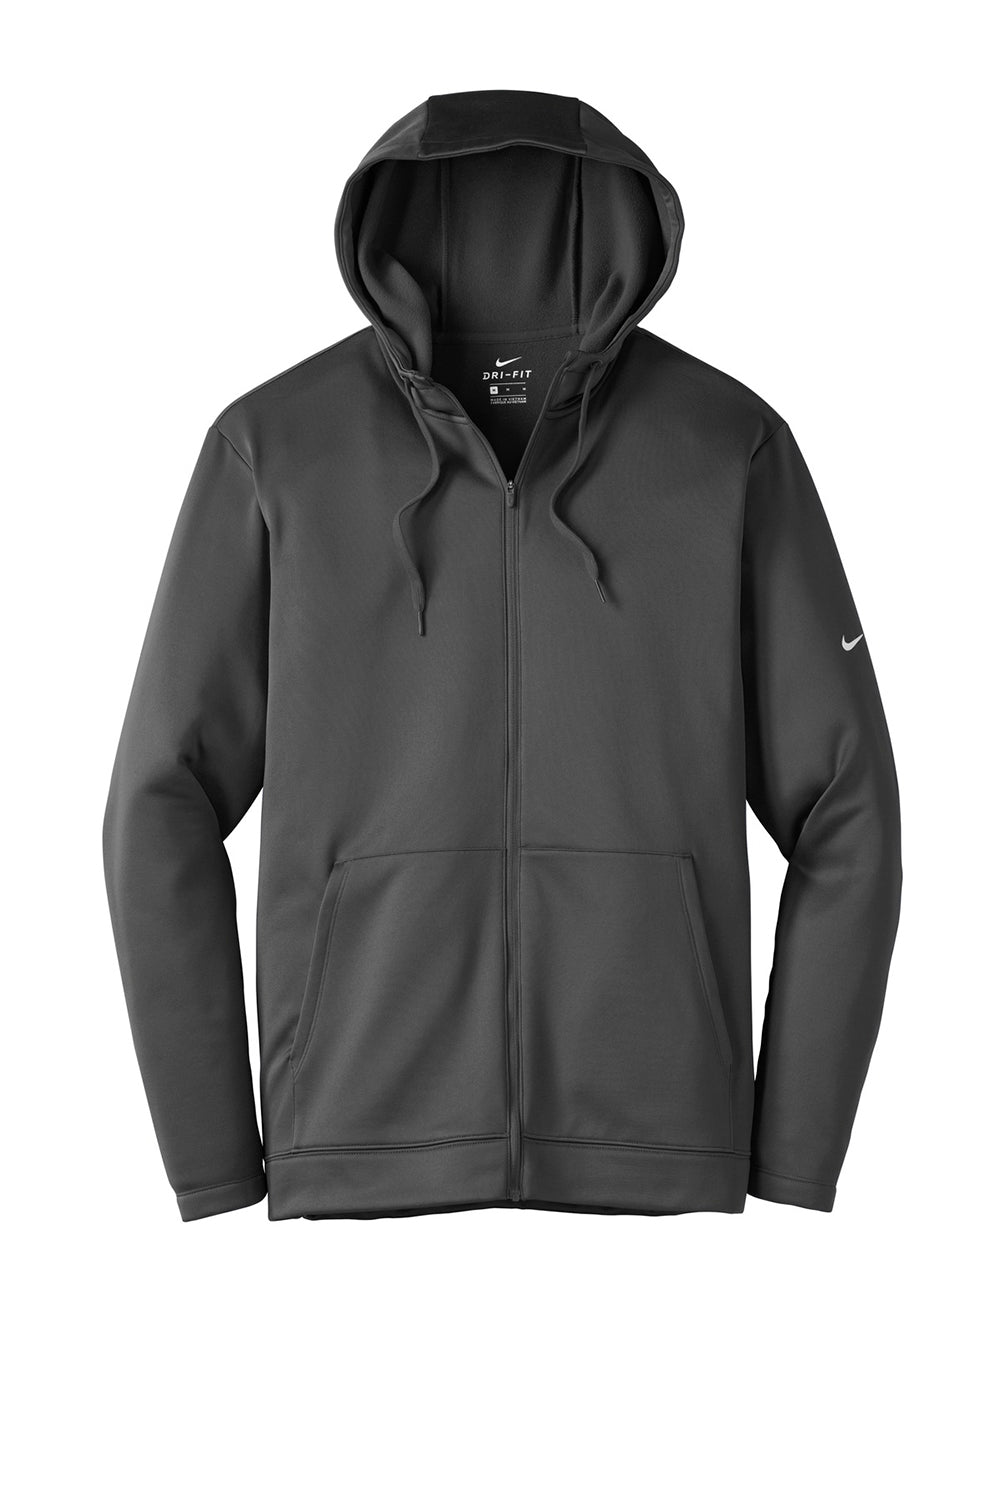 Nike NKAH6259 Mens Therma-Fit Moisture Wicking Fleece Full Zip Hooded Sweatshirt Hoodie Anthracite Grey Flat Front